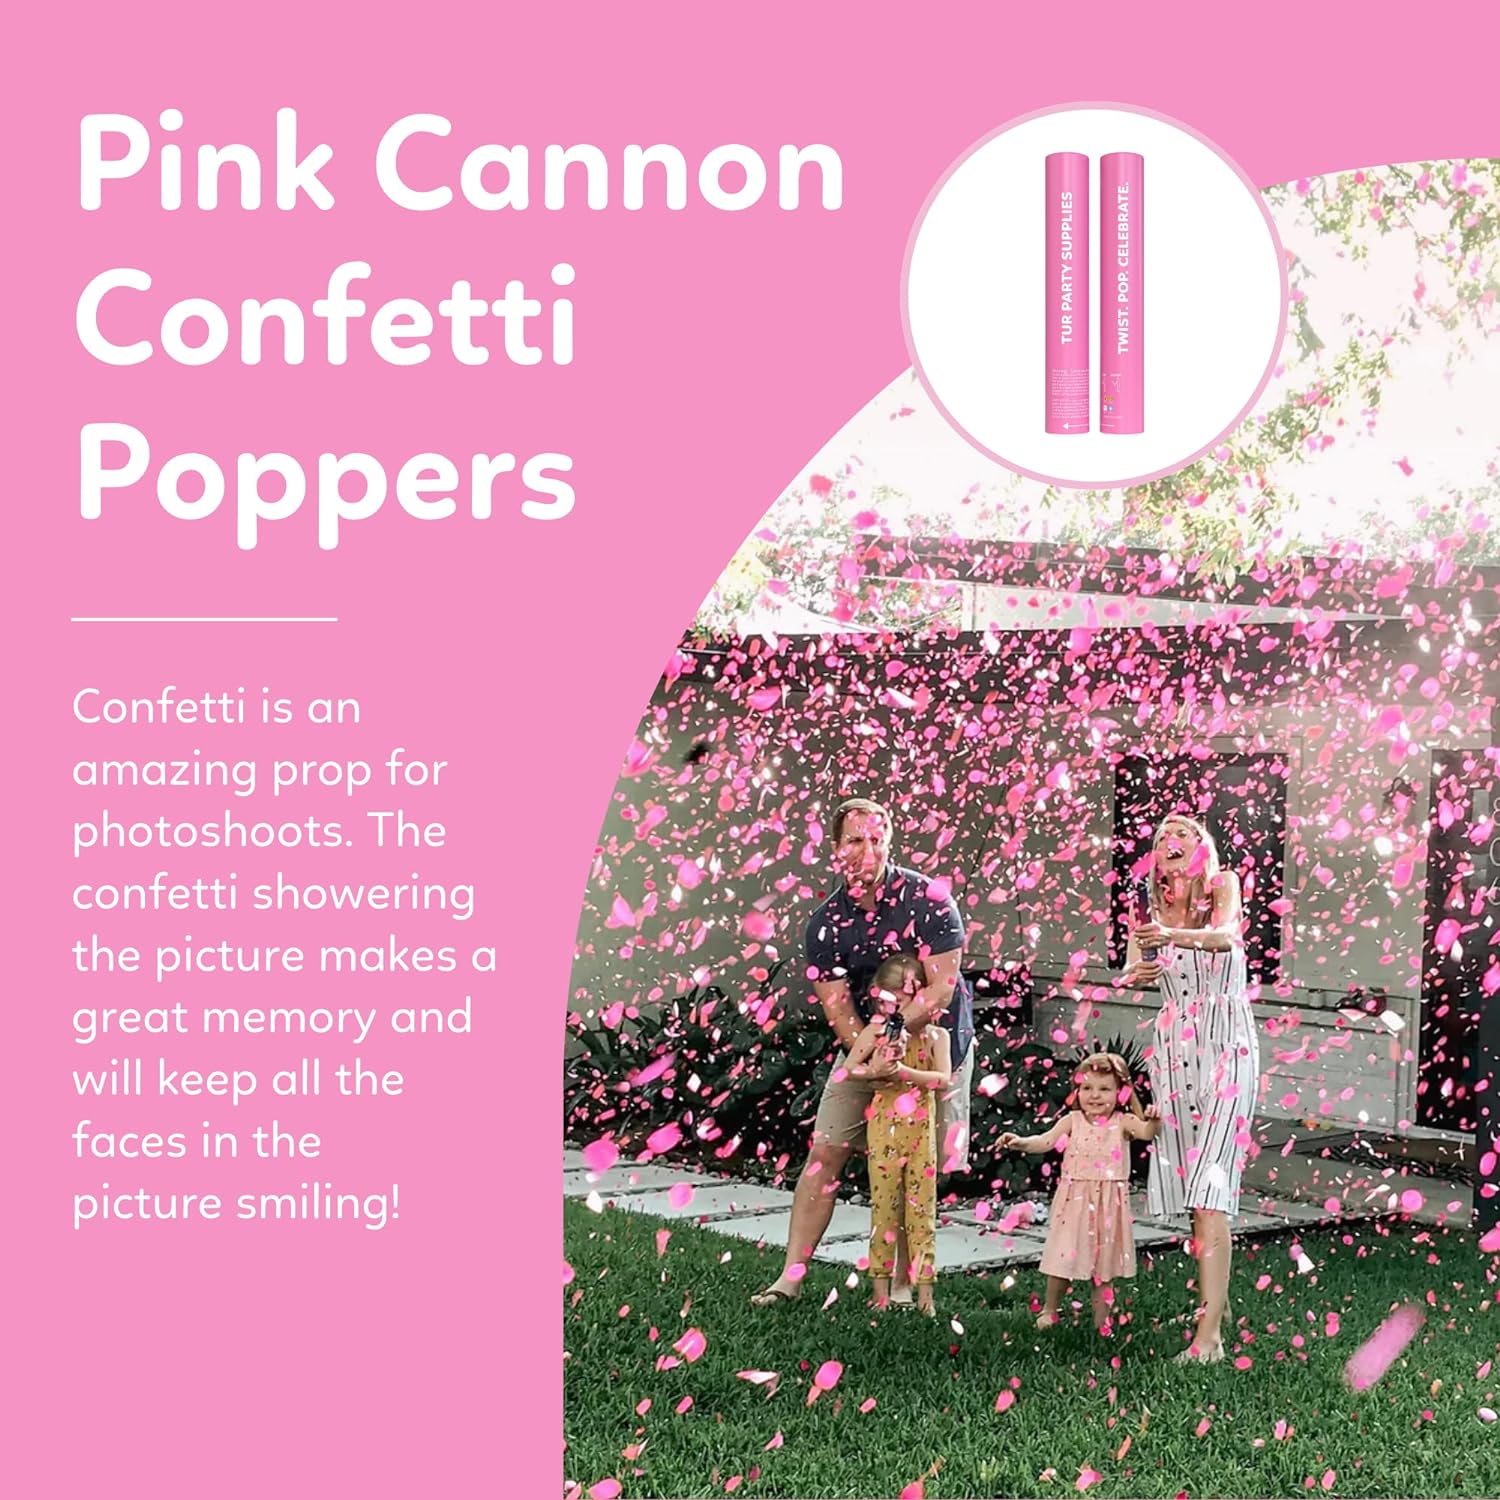 Pink Confetti Cannon Confetti Poppers | Biodegradable 2 Pack